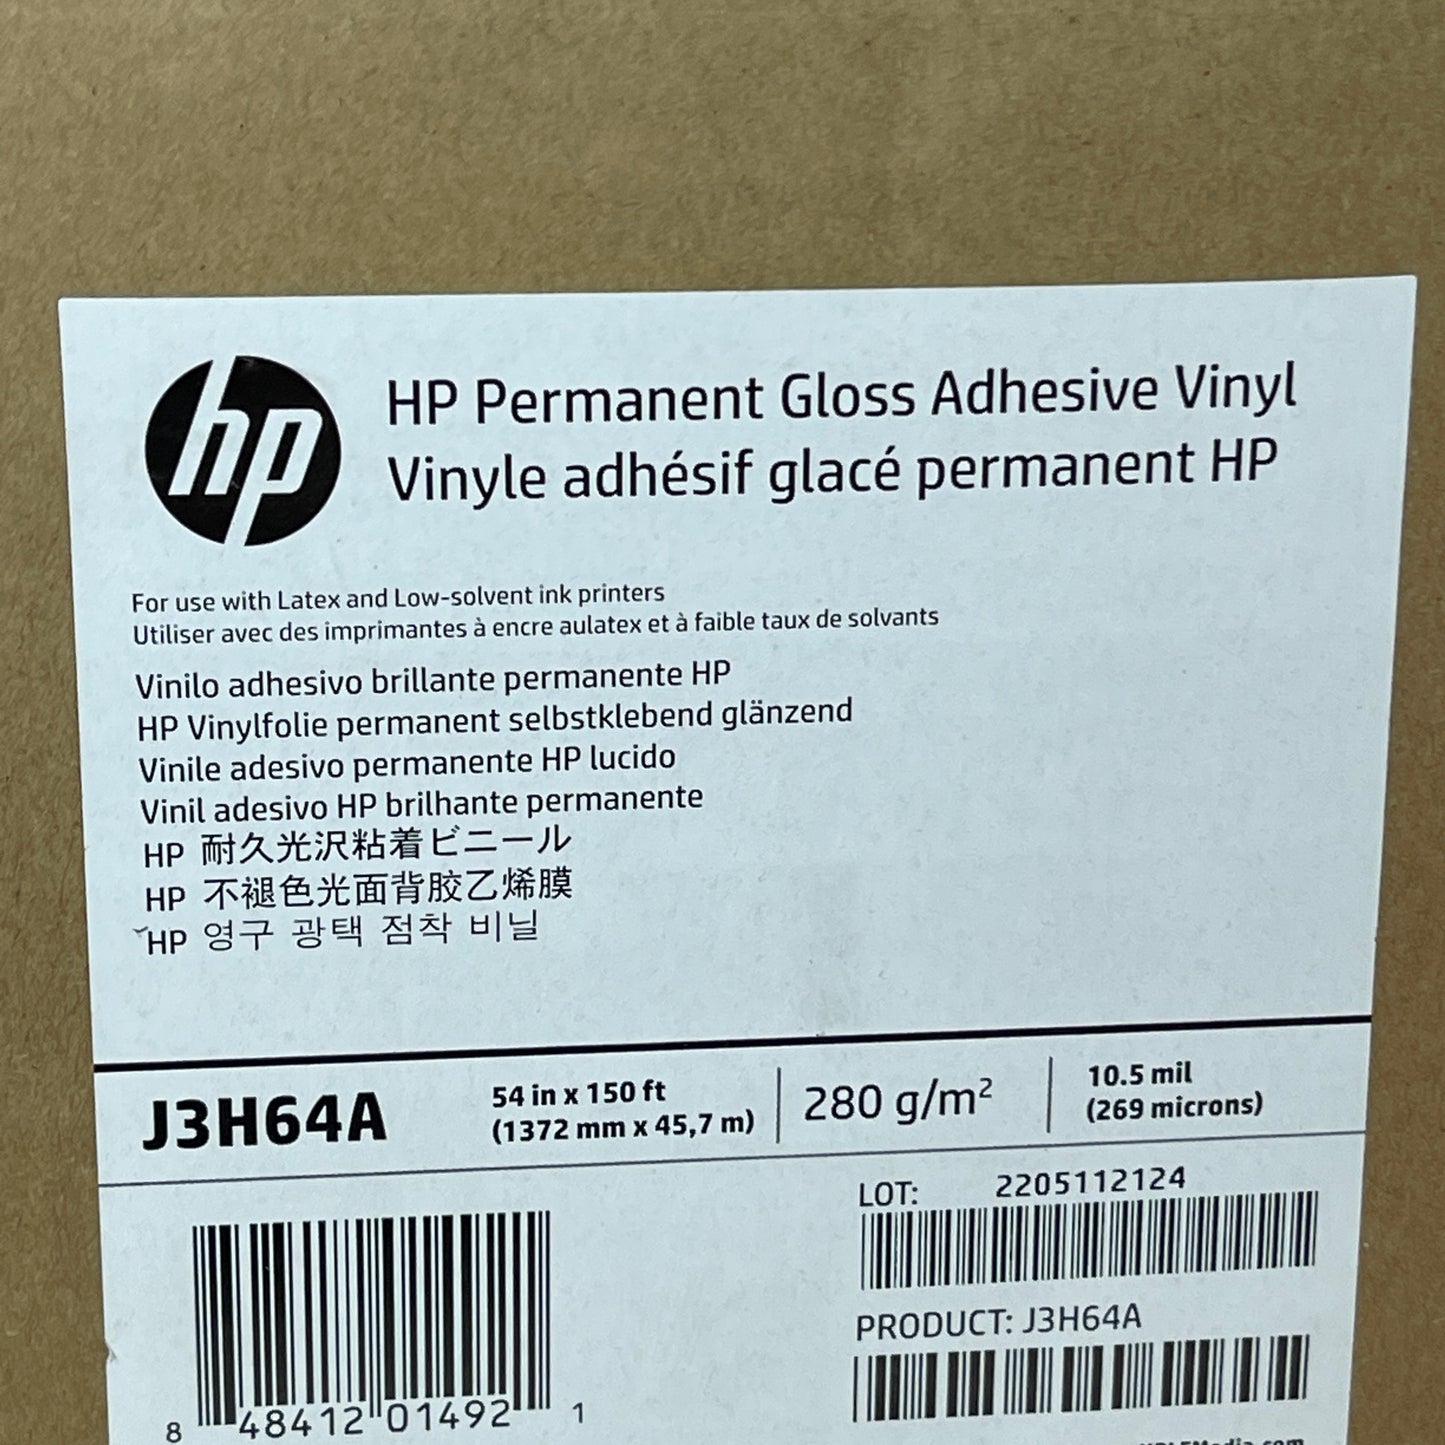 HP Permanent Gloss Adhesive Vinyl 54" X 150' 10.5 mil J3H64A (New)